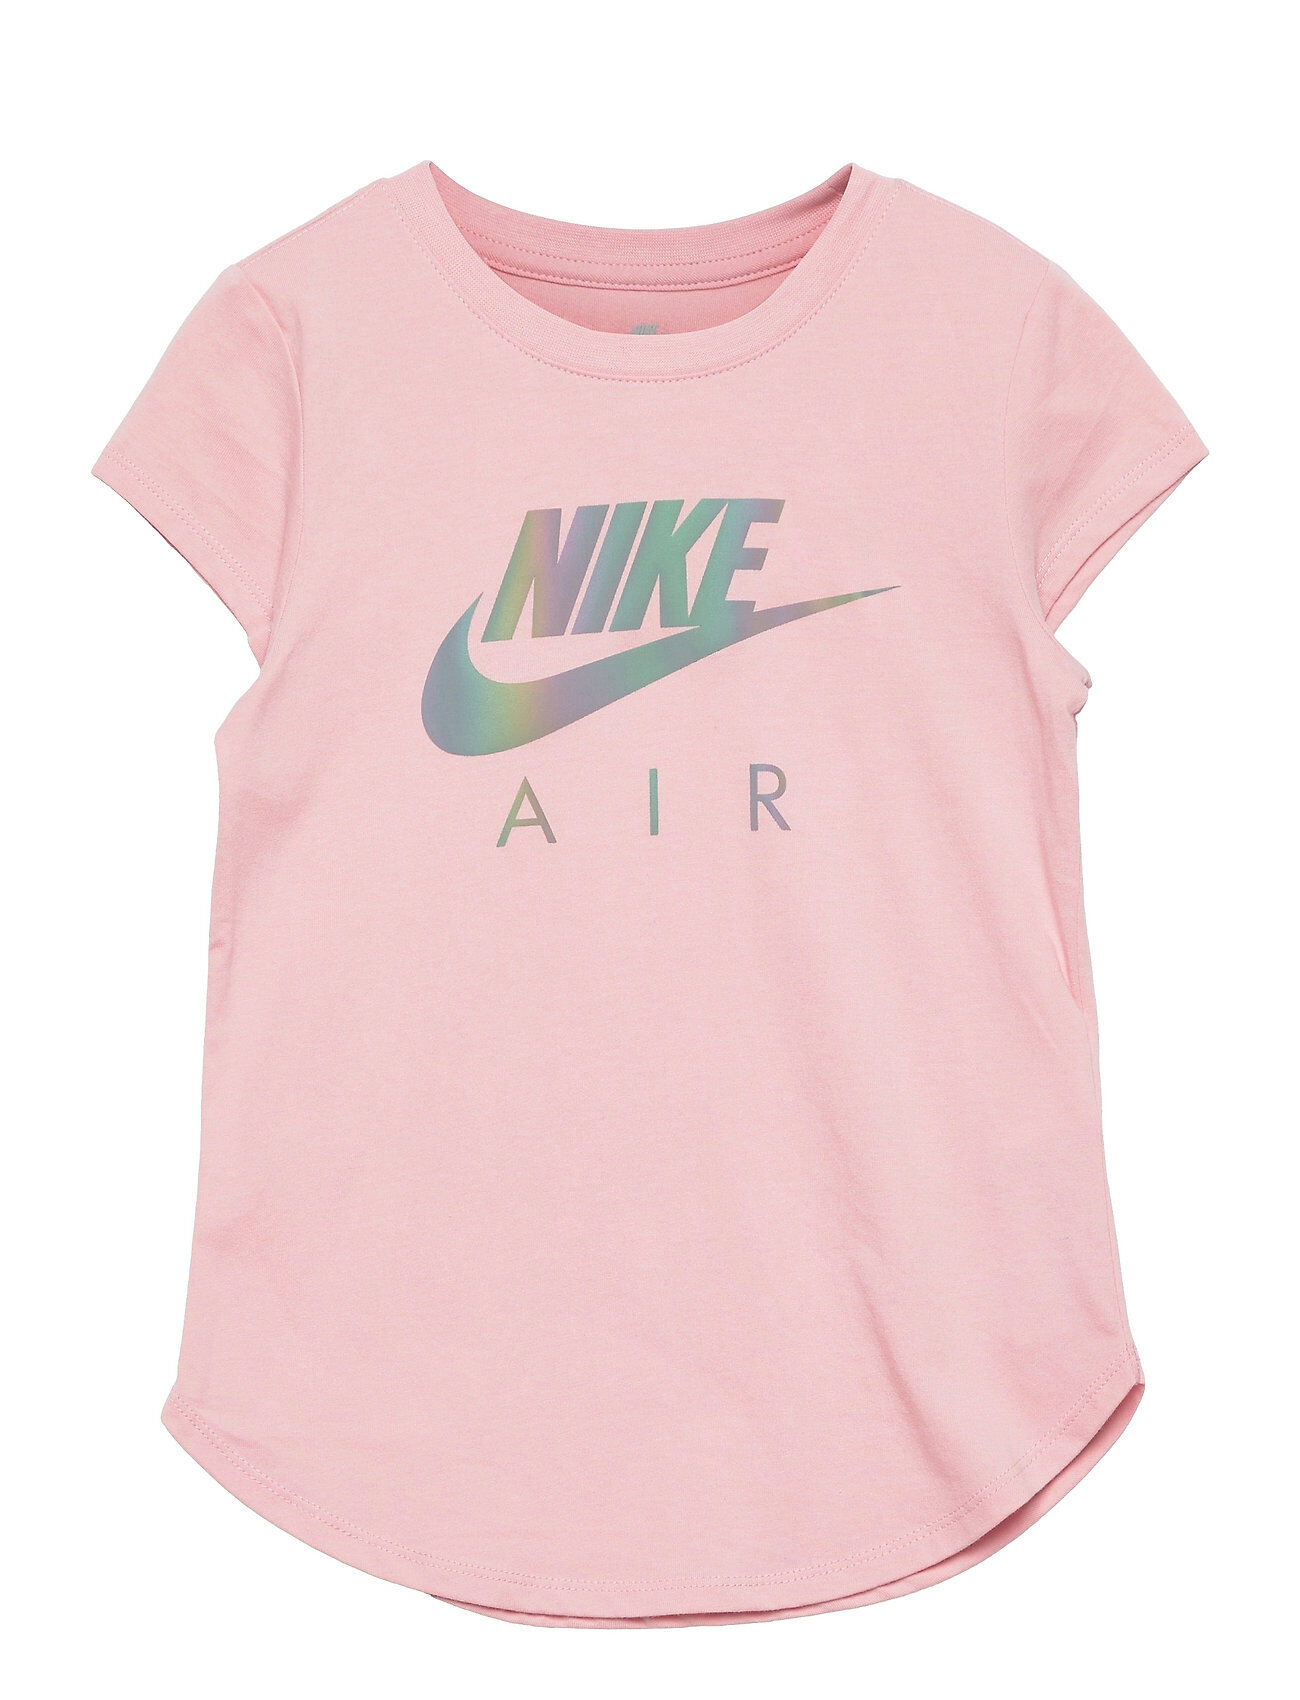 Nike S/S Graphic T-Shirt T-shirts Short-sleeved Rosa Nike